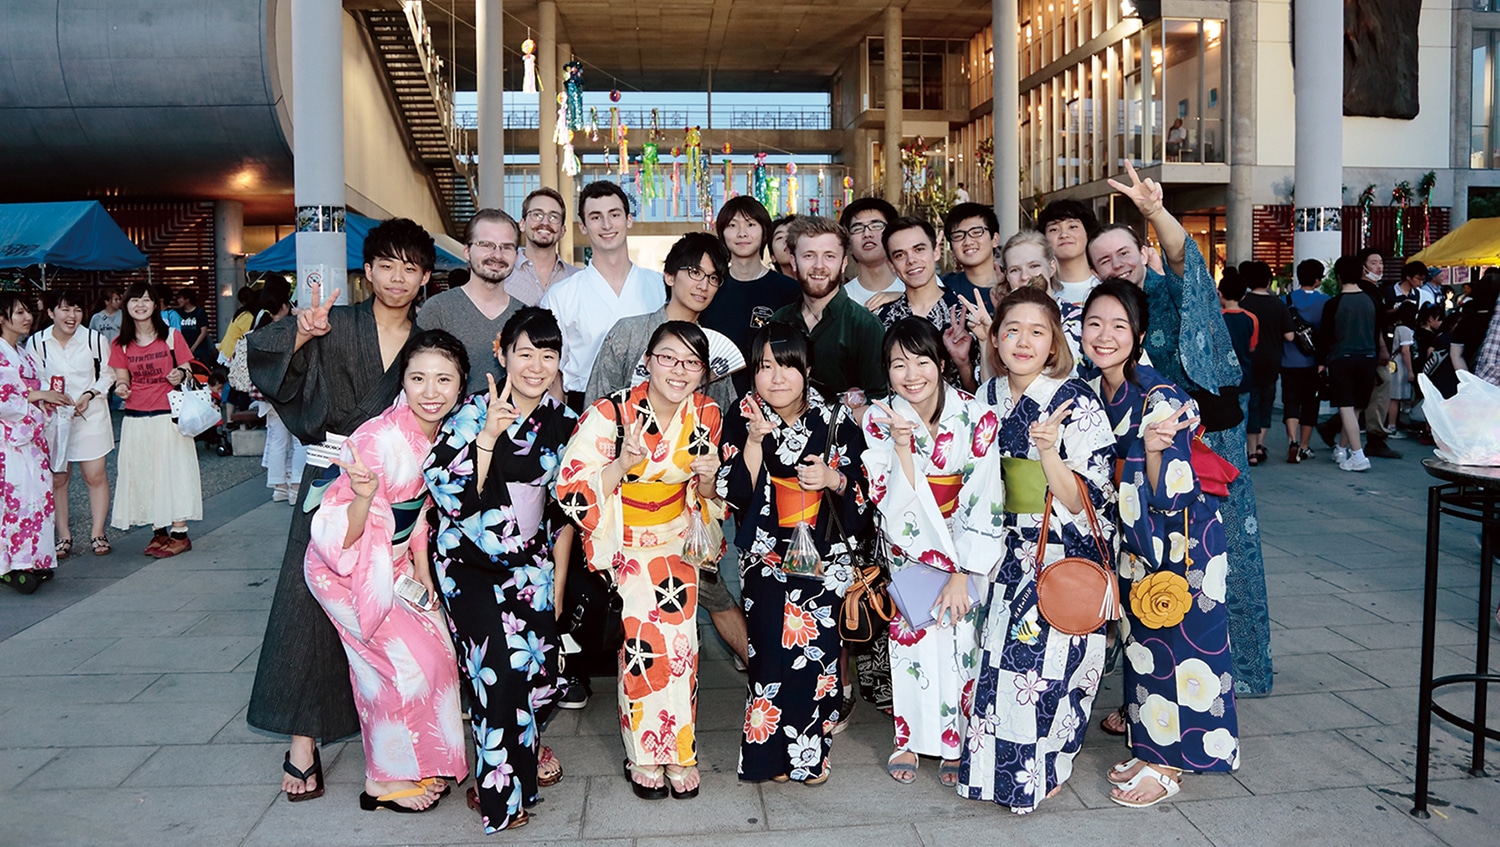 iCLA students in Yukata at the YGU Tanabata Festival